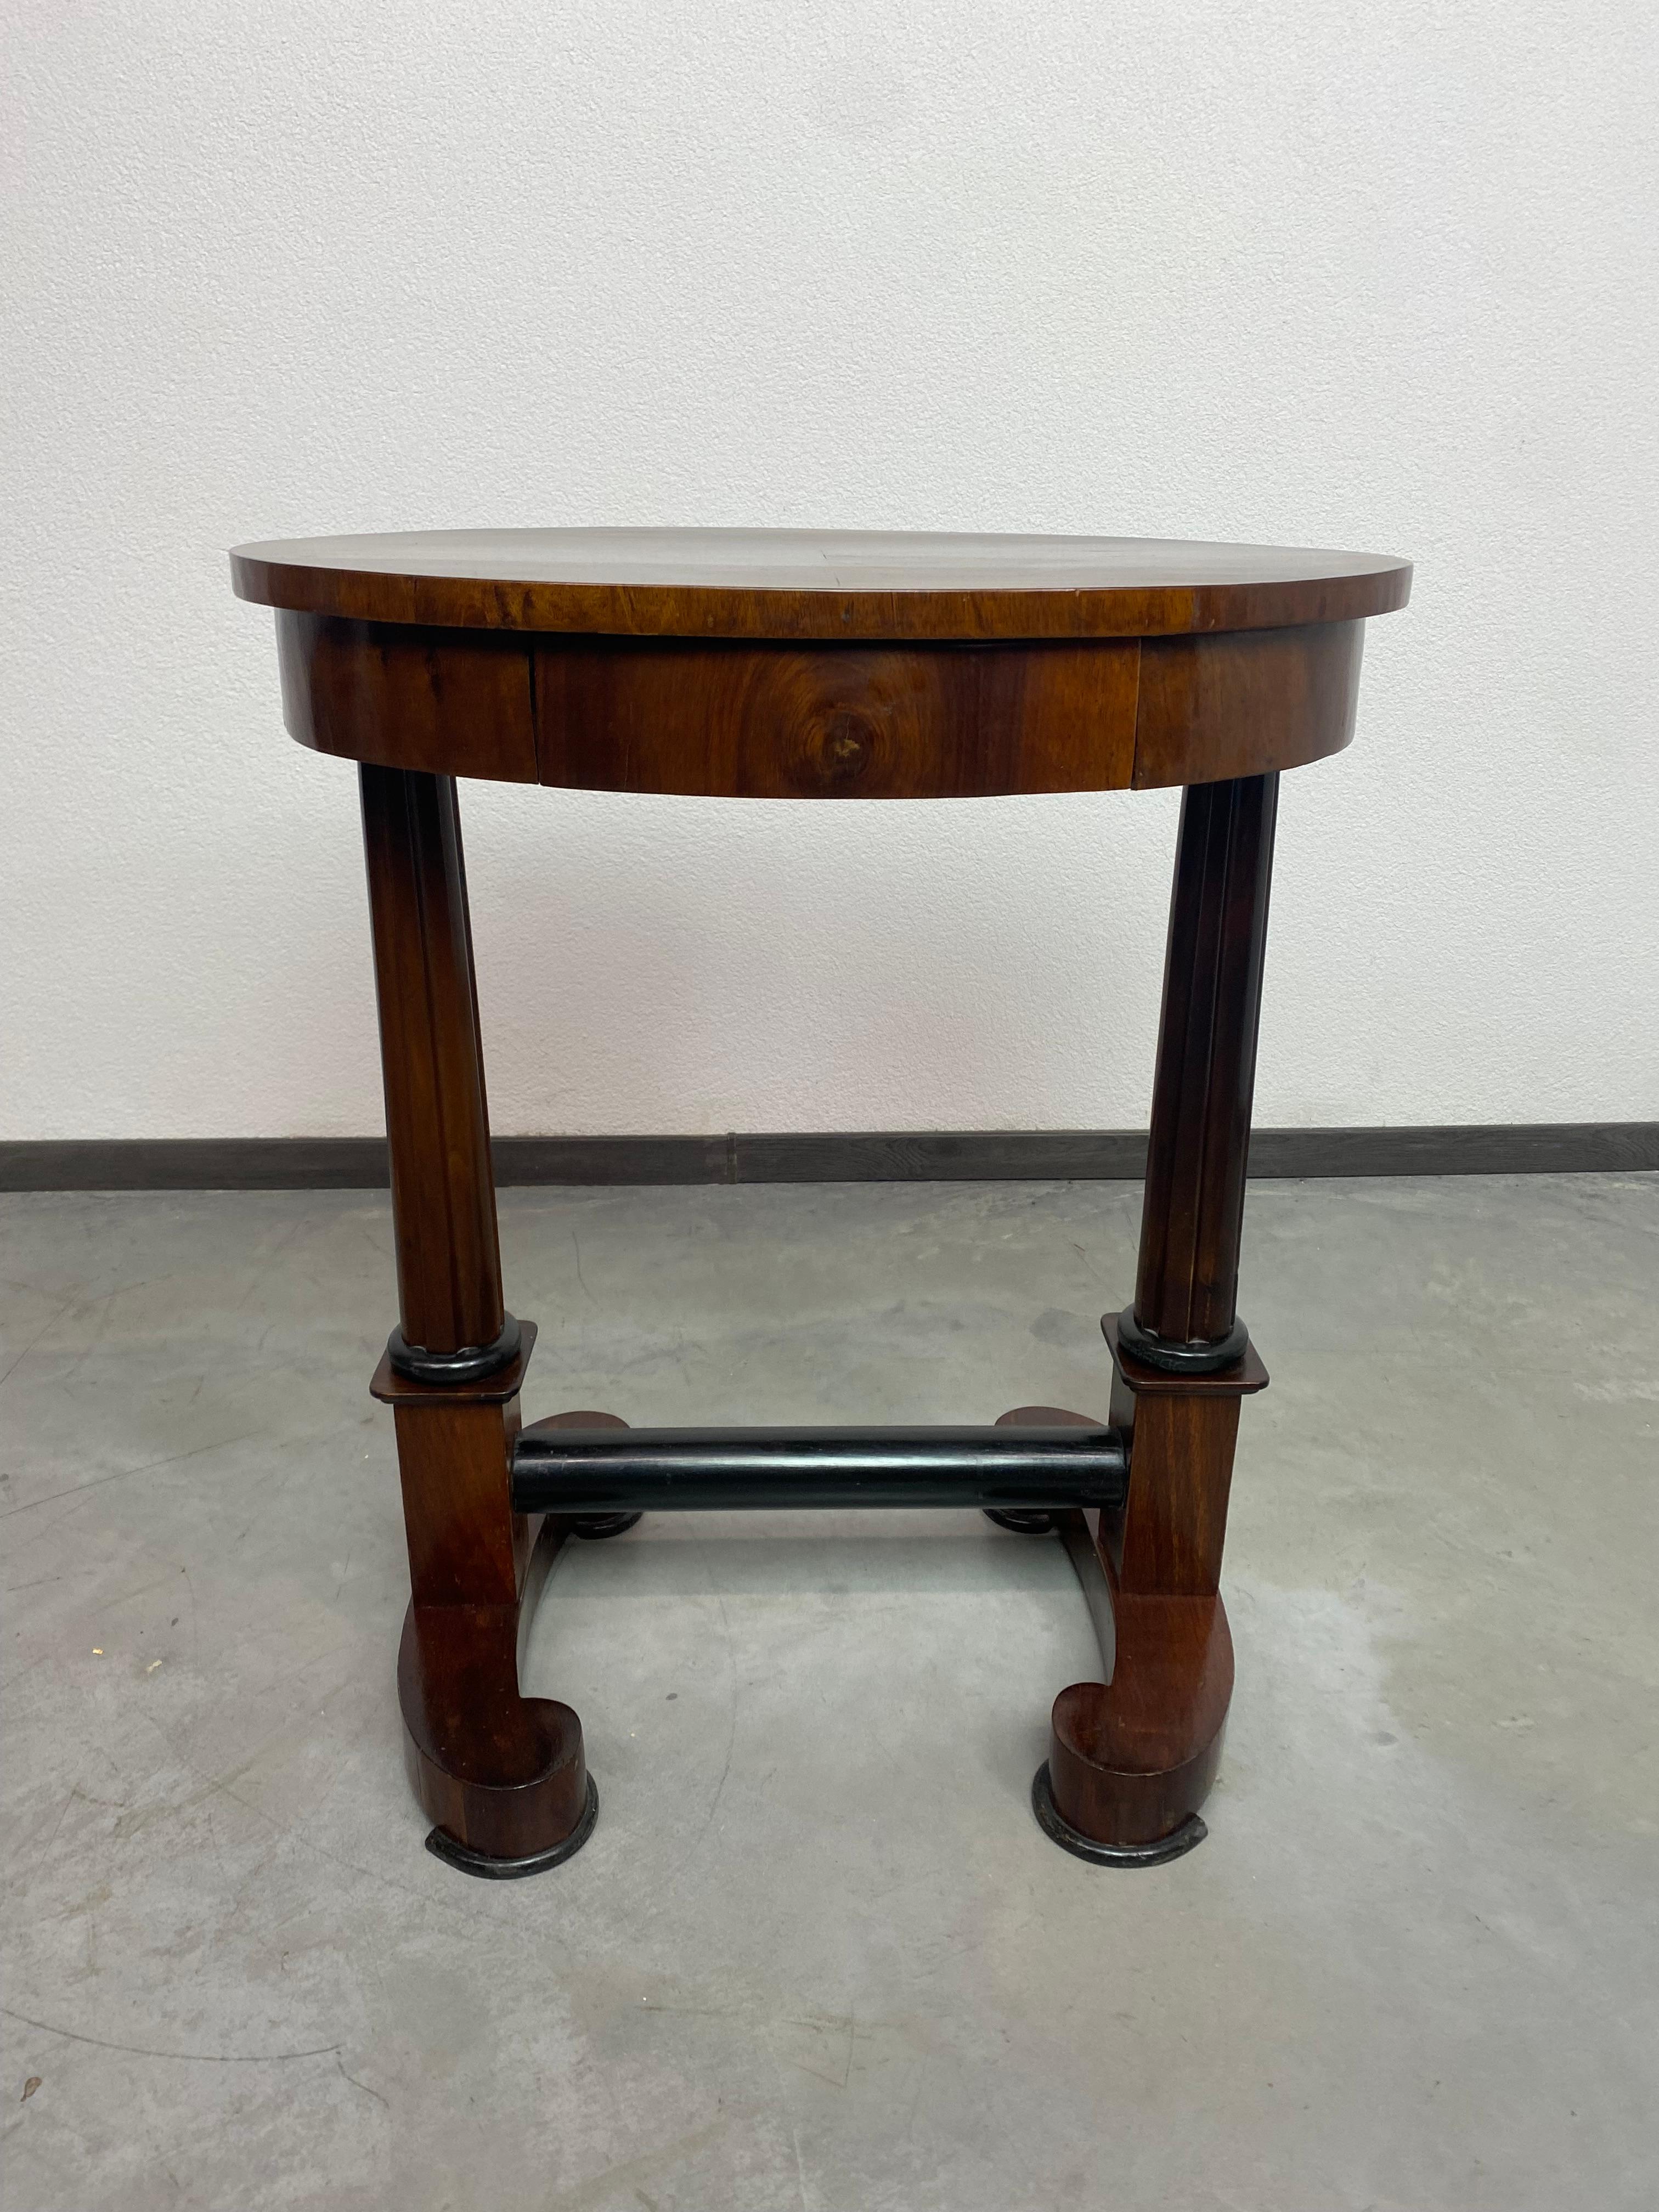 19th century biedermeier side table in very good original condition.